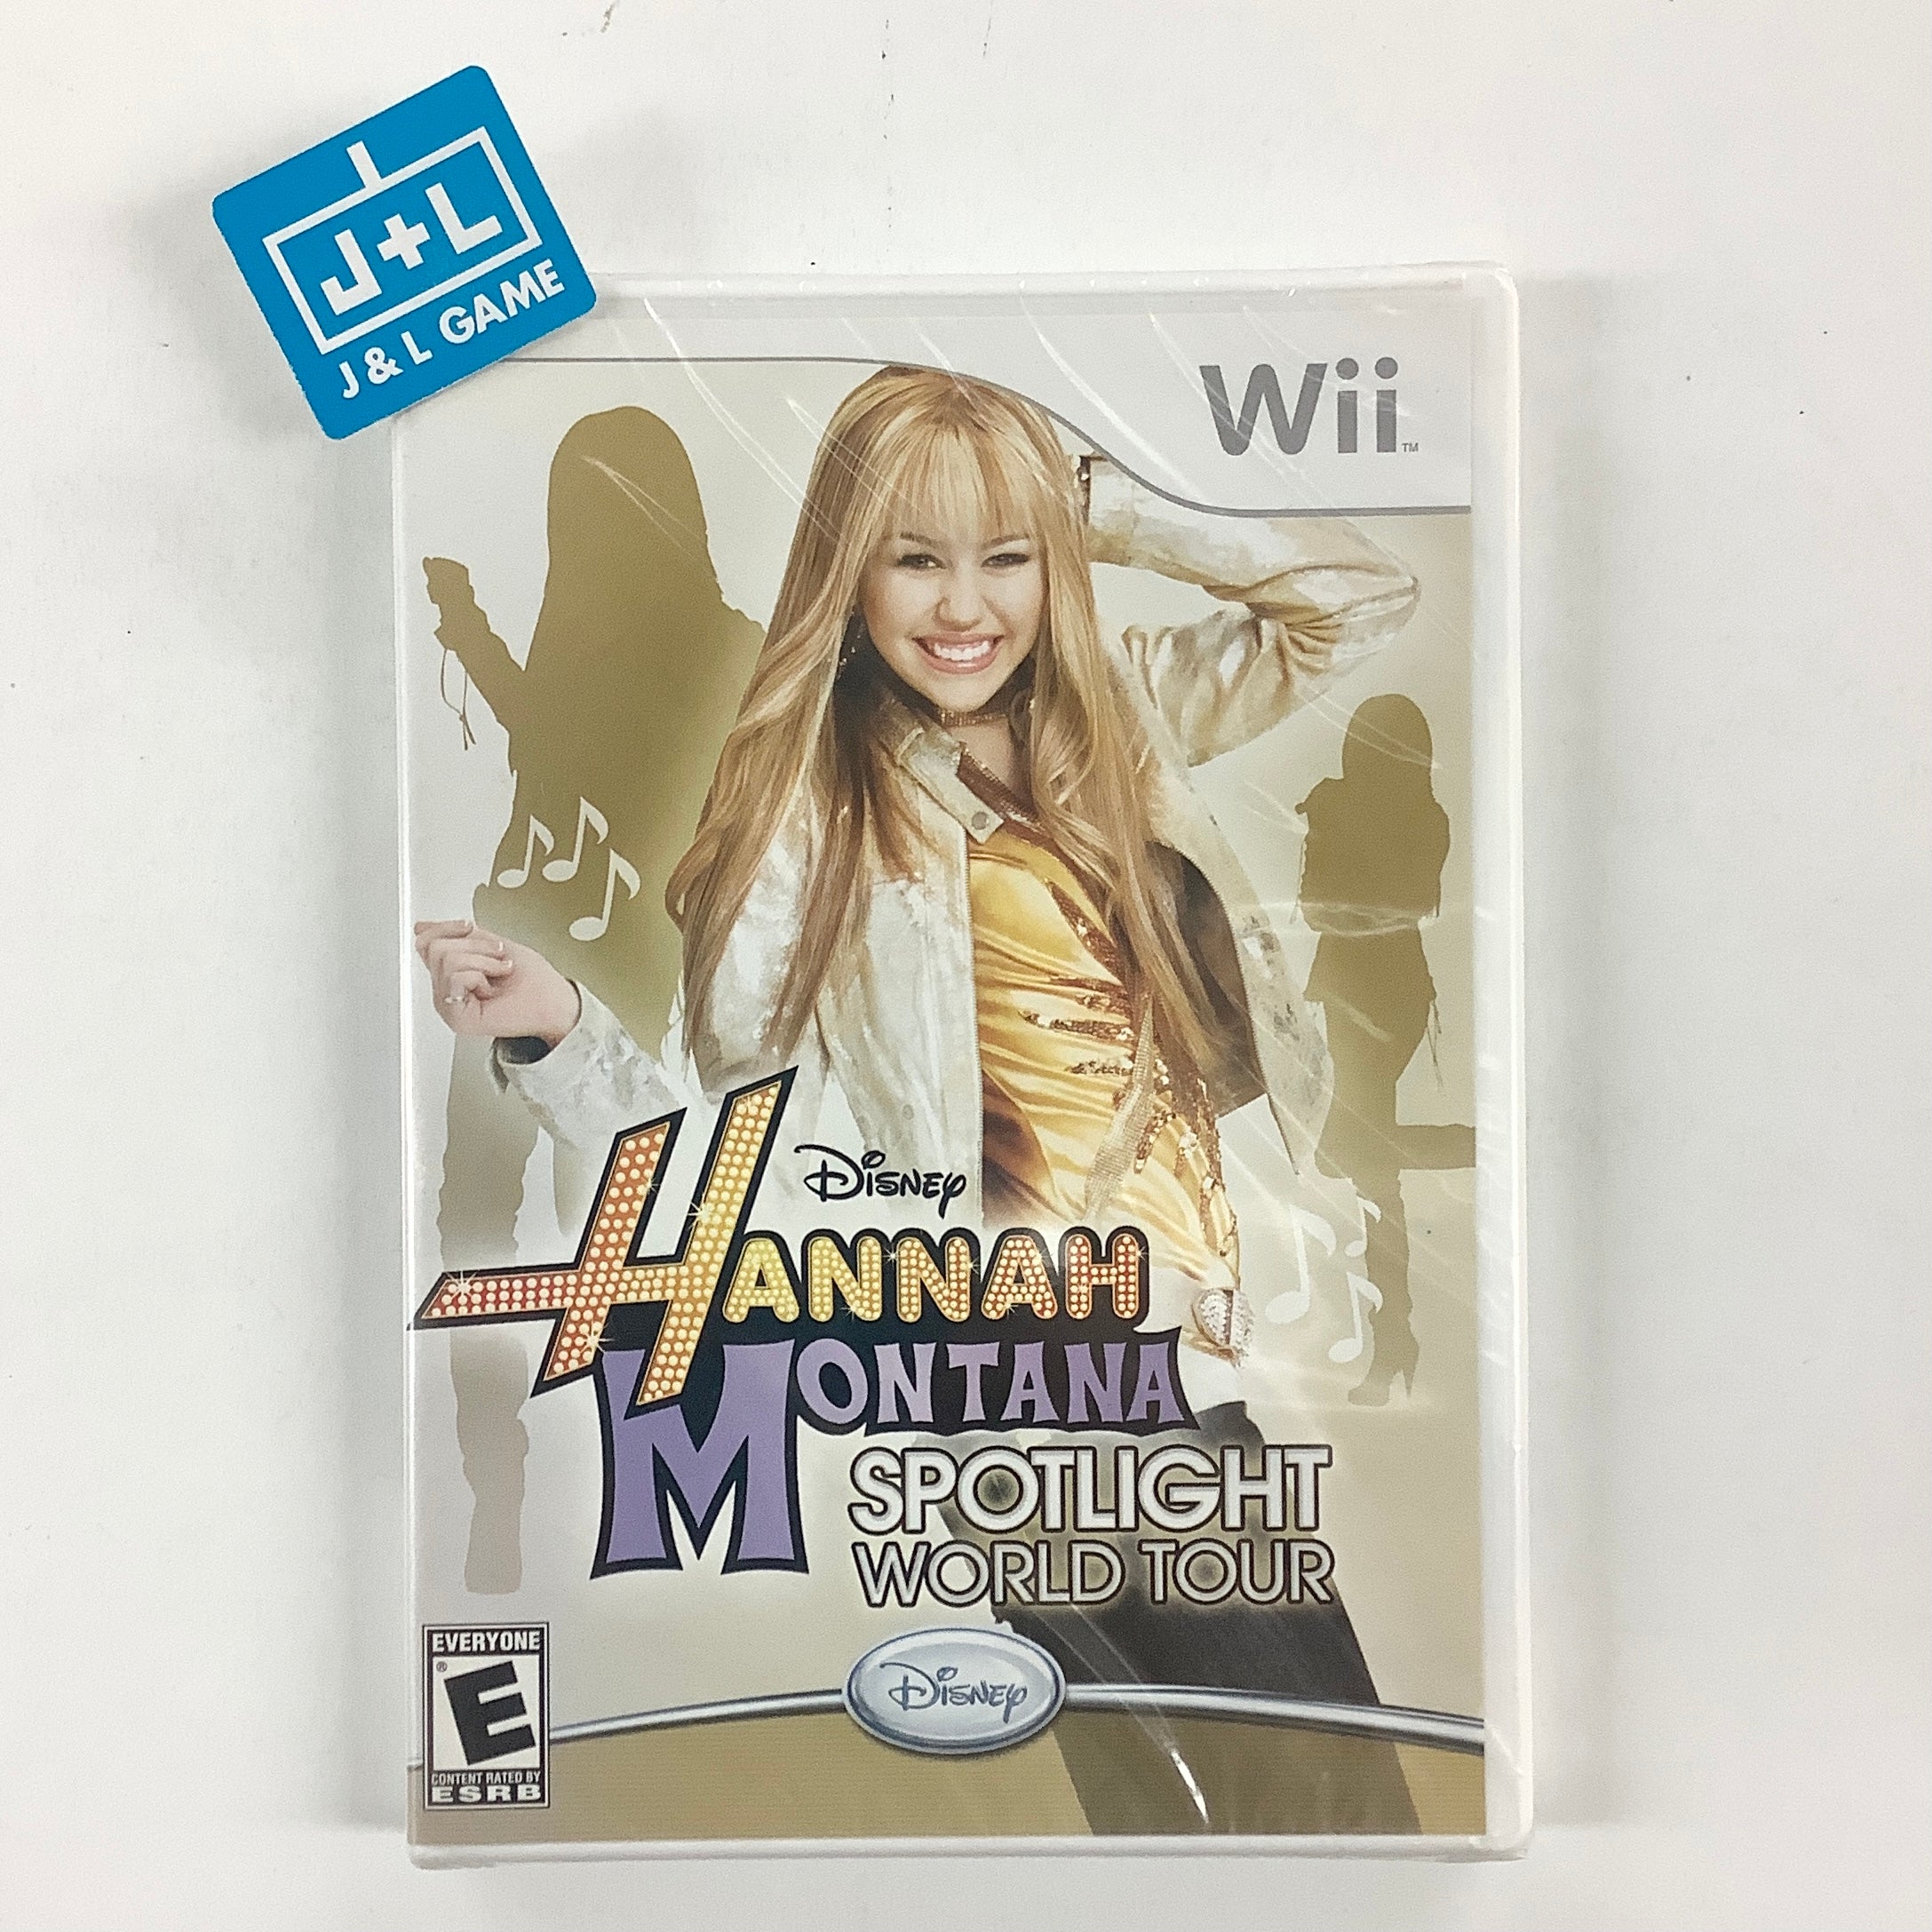 Hannah Montana: Spotlight World Tour - Nintendo Wii Video Games Disney Interactive Studios   